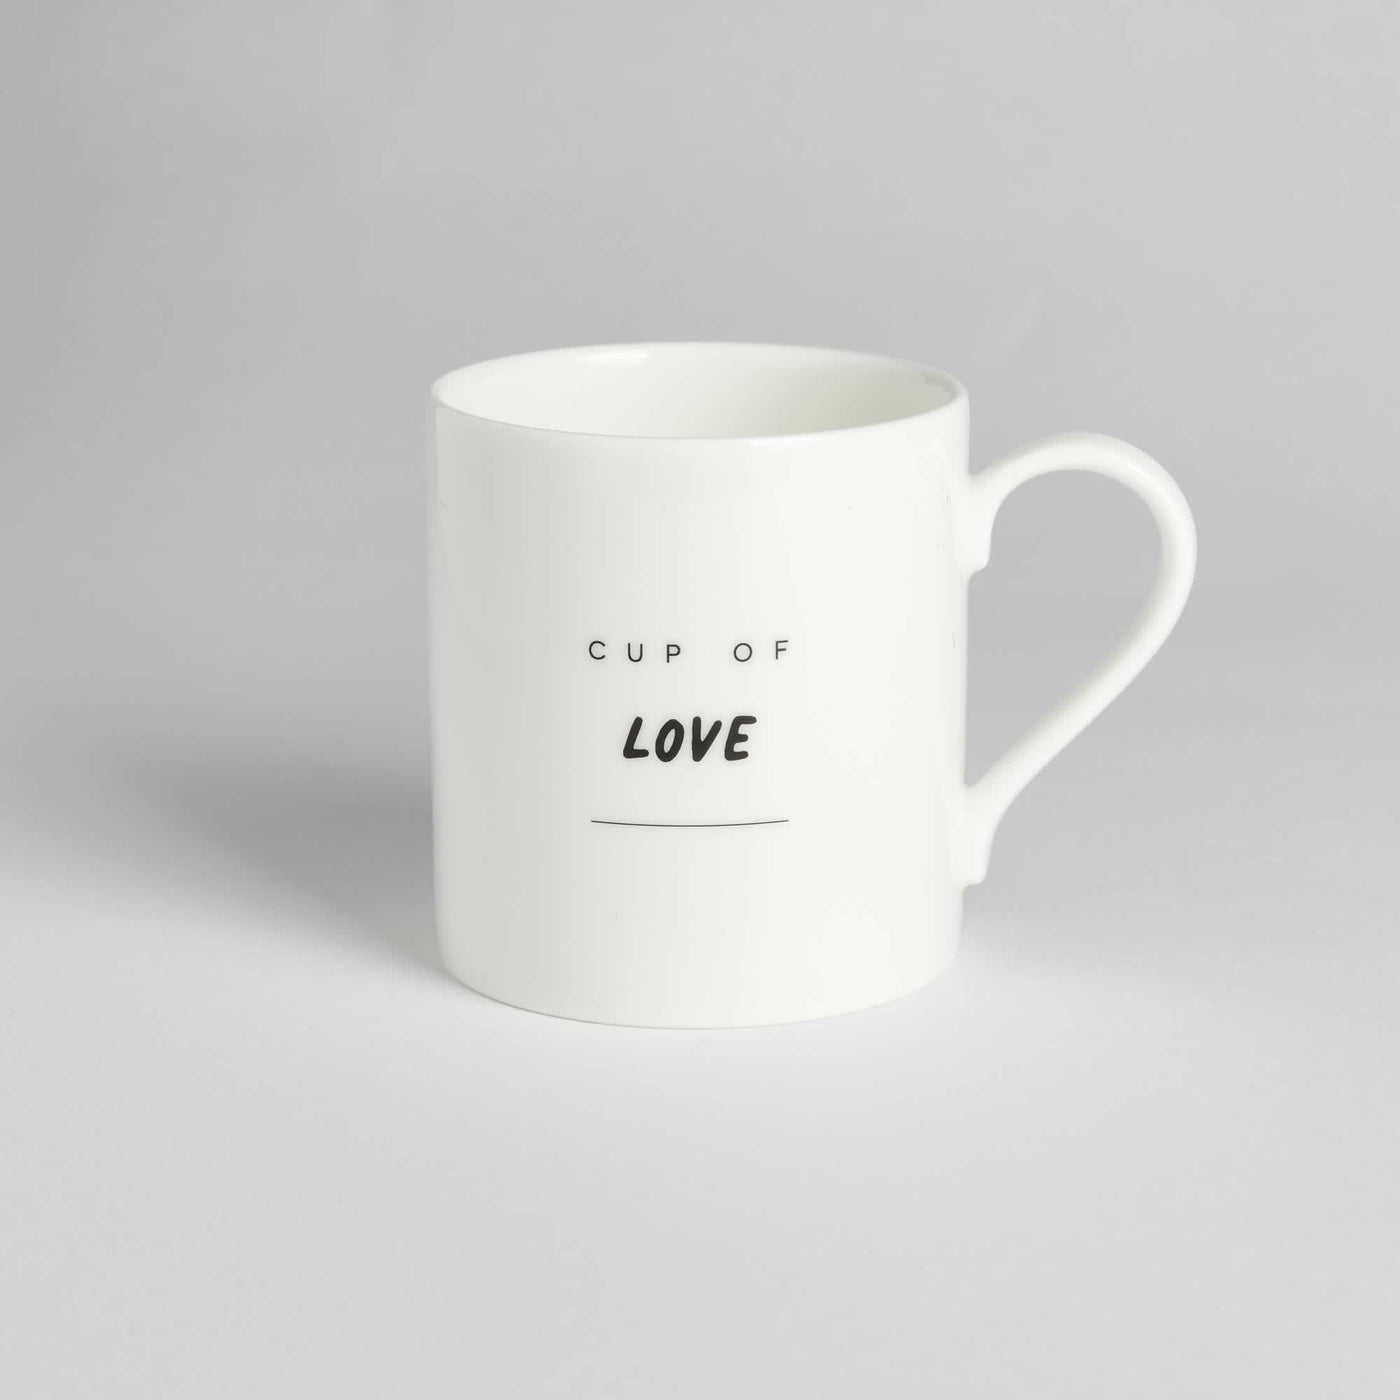 Cup of Love Mug